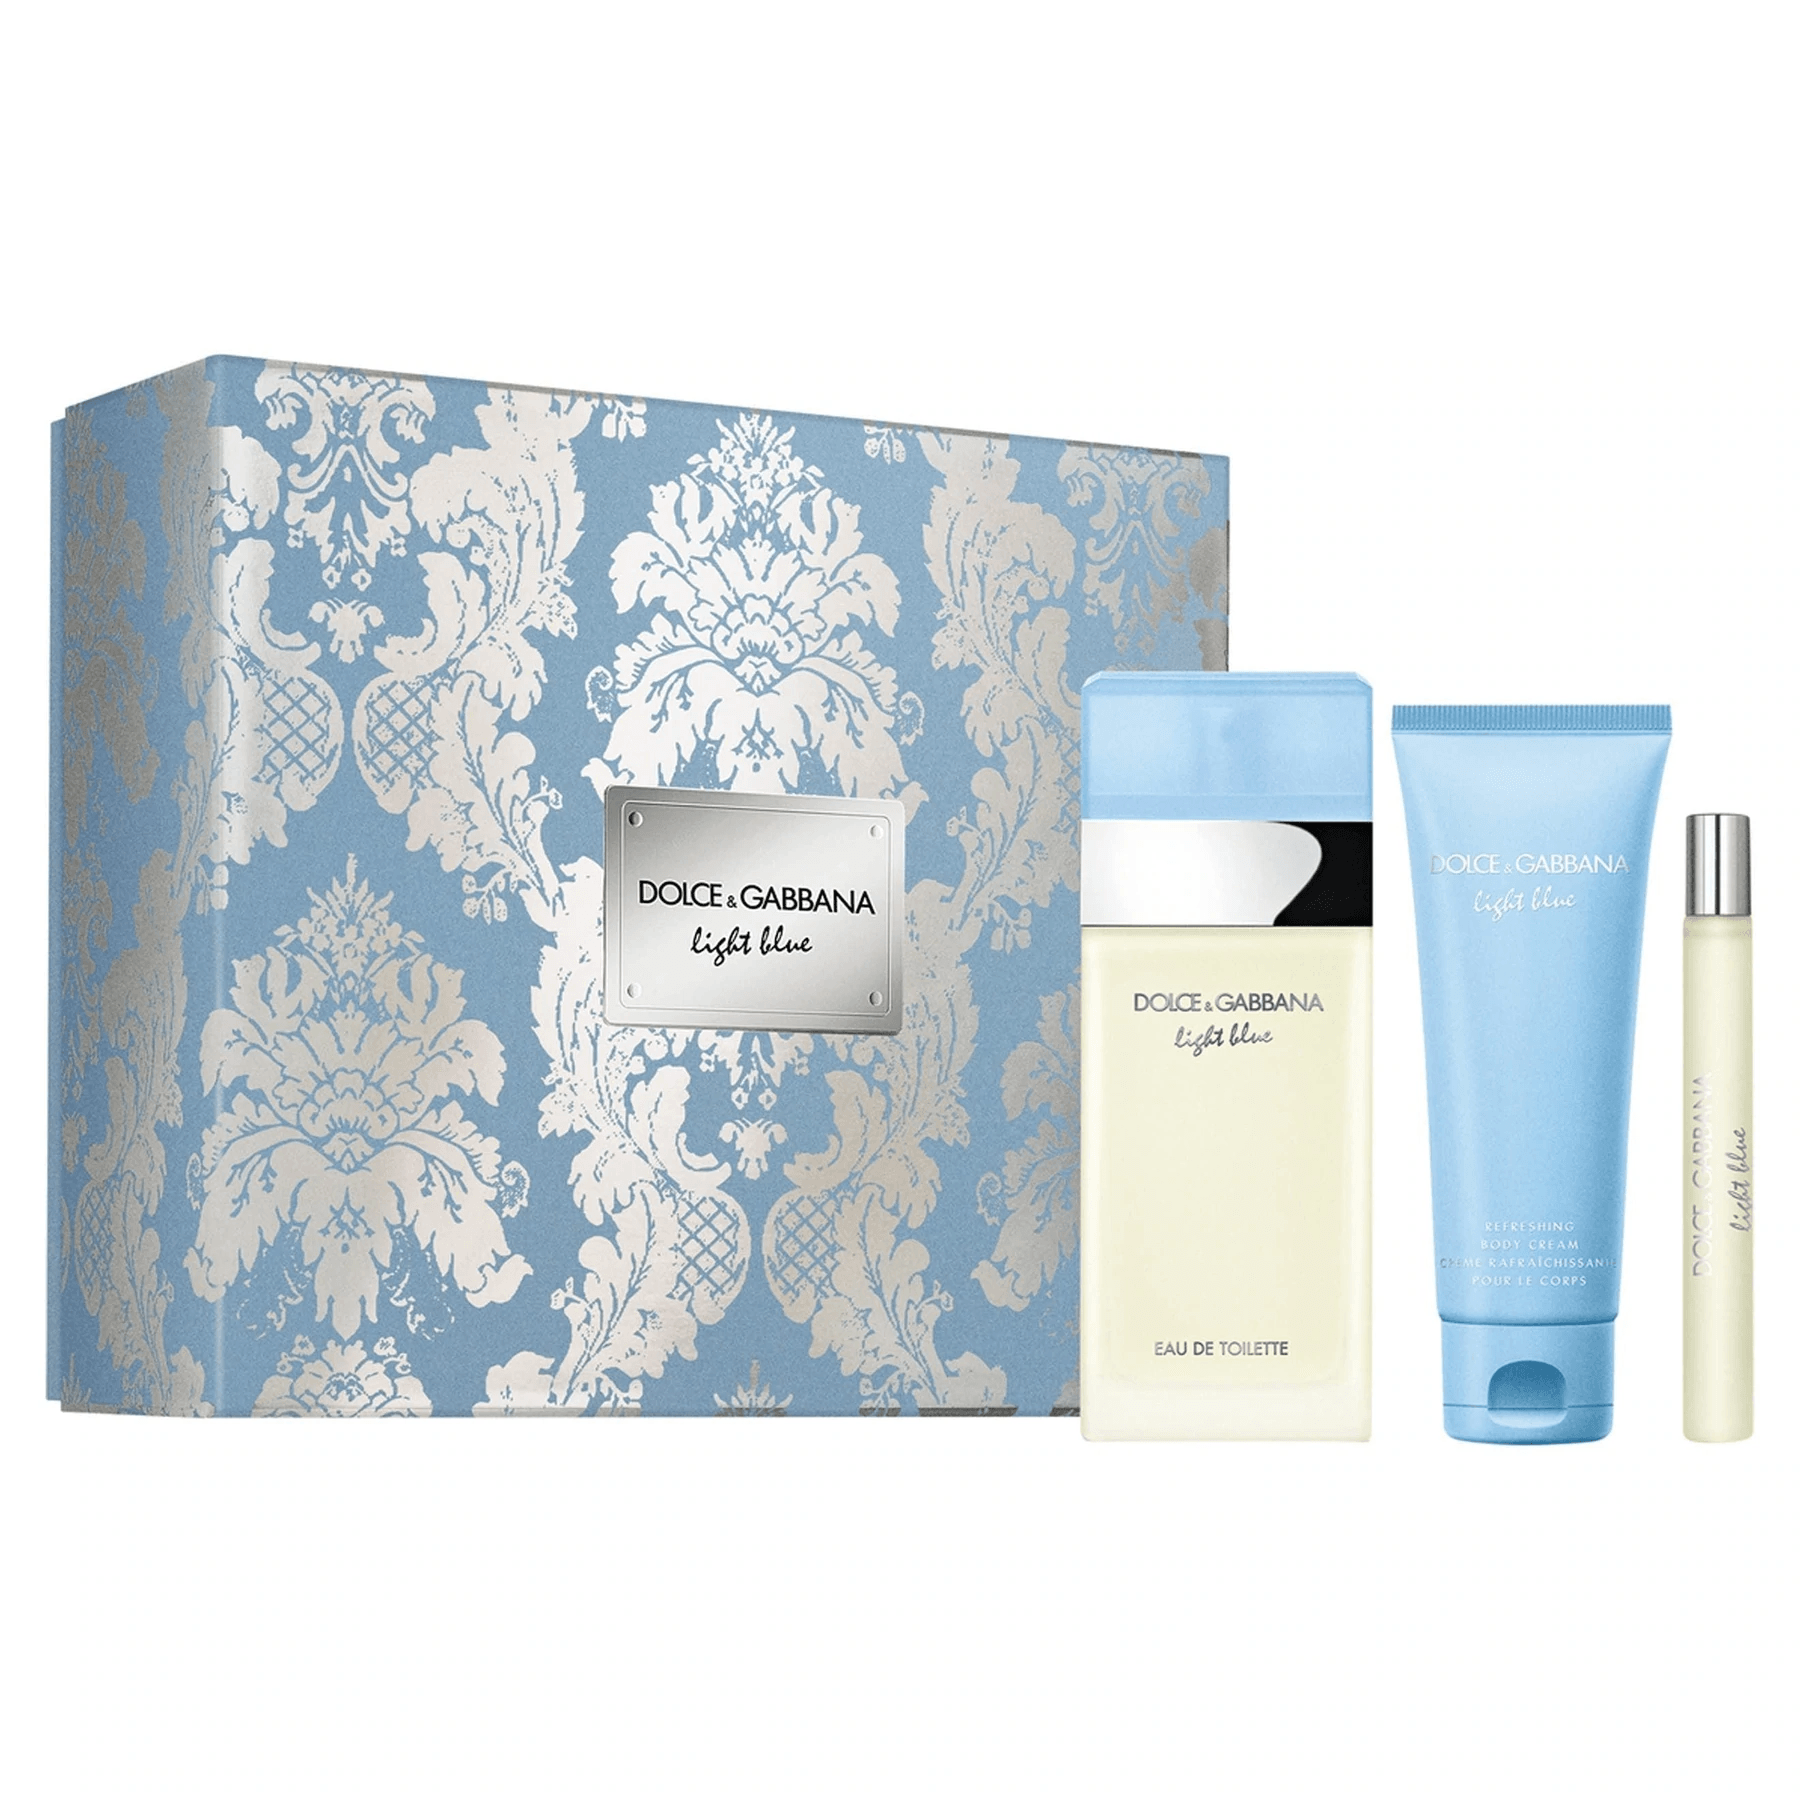 Dolce & Gabbana Light Blue EDT Deluxe Gift Set | My Perfume Shop Australia